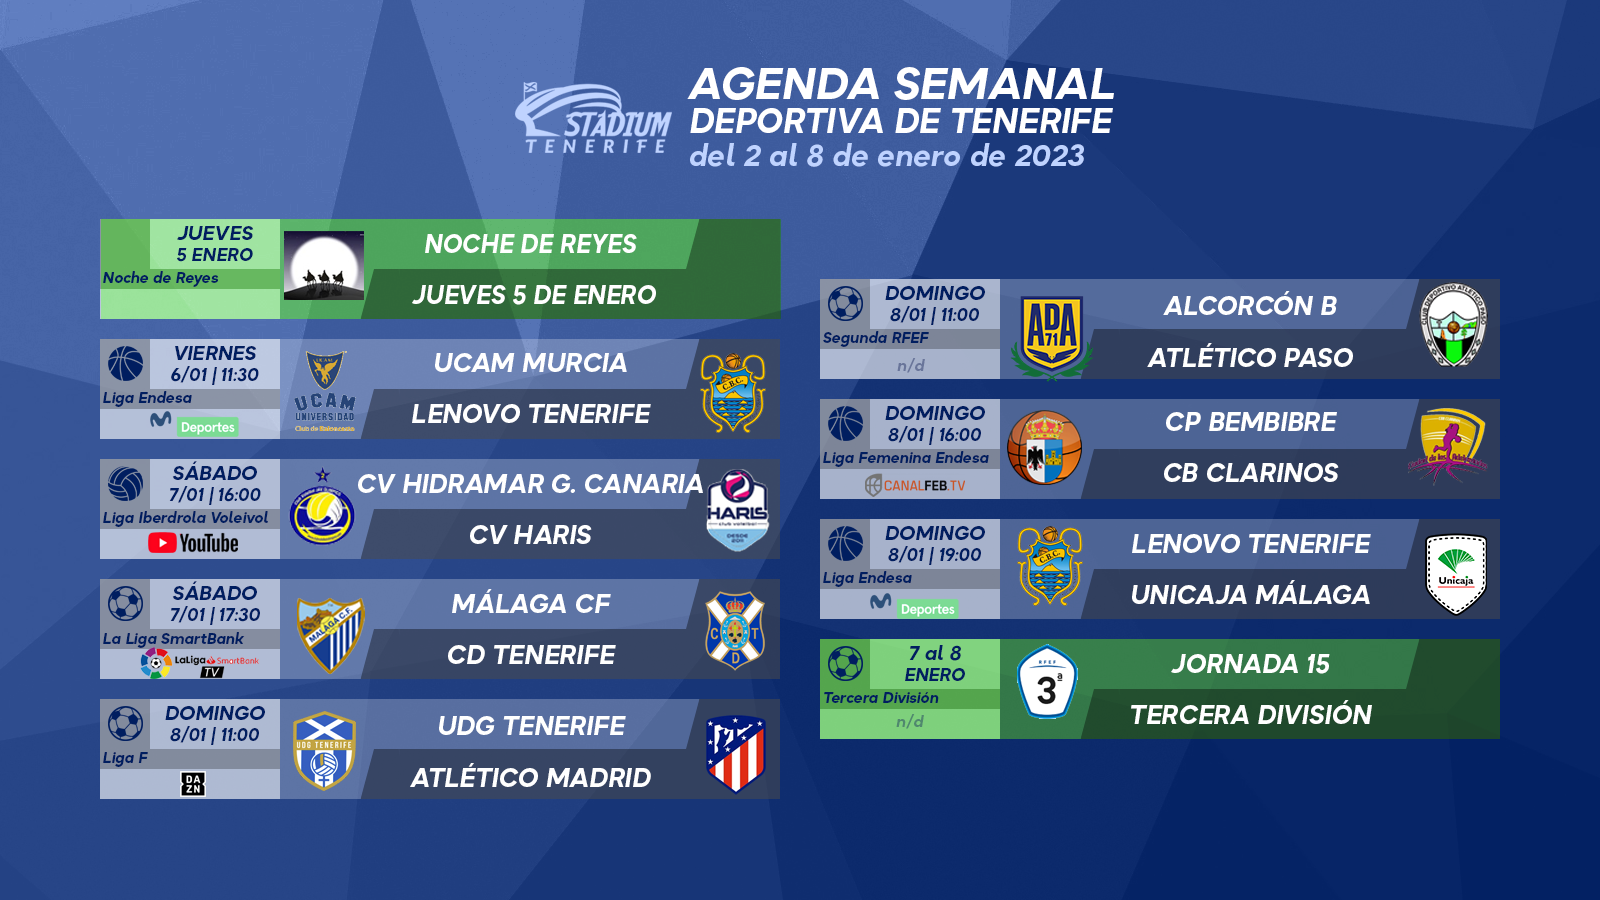 Agenda Semanal Deportiva de Tenerife (2 al 8 de enero)